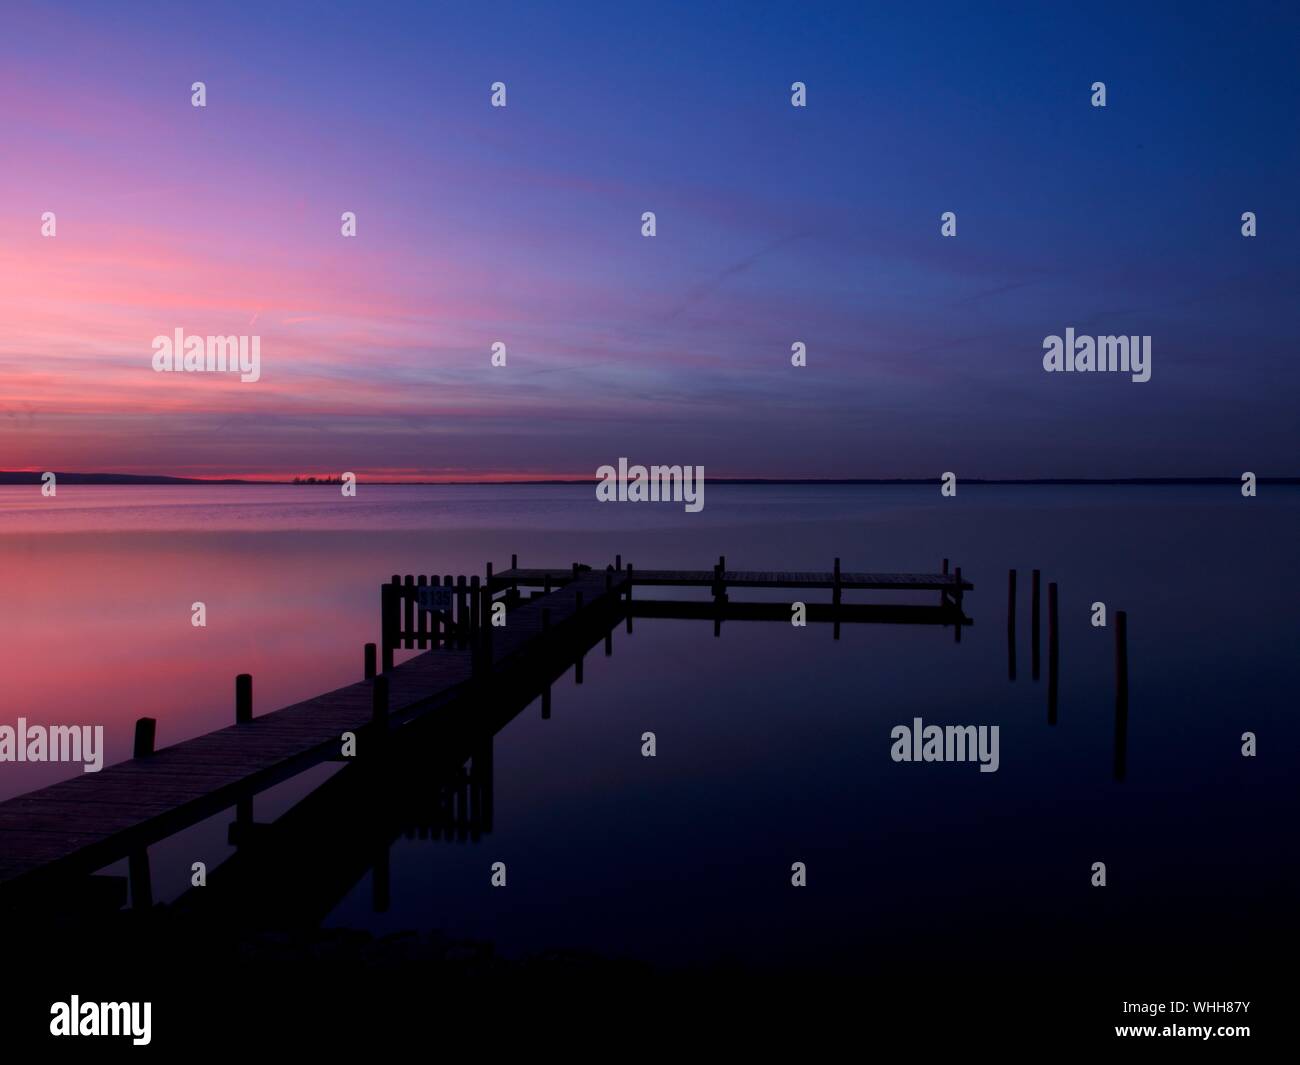 Silhouette Jetty In Steinhuder Meer Against Sky During Sunset Stock Photo